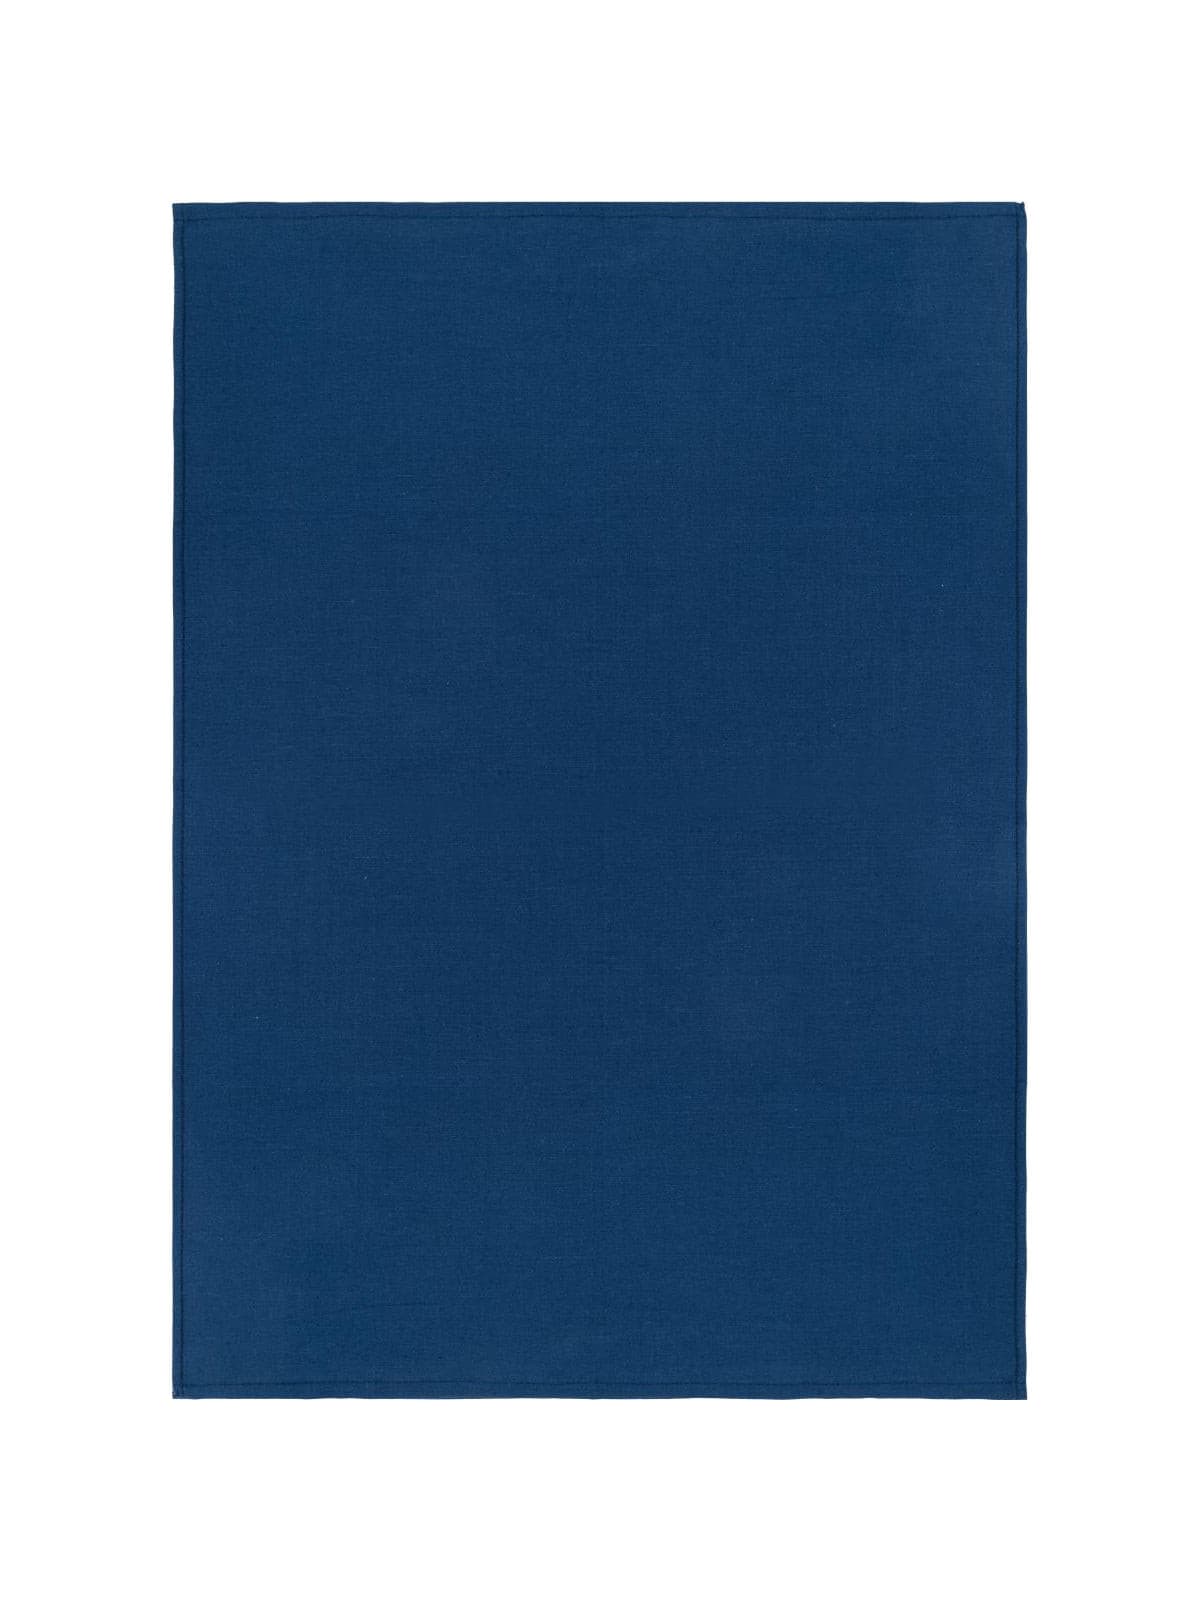 Kitchen Towel Half-Linen Navy Blue - 12 Pcs by Kitchen & Table Linens -  ChefsCotton